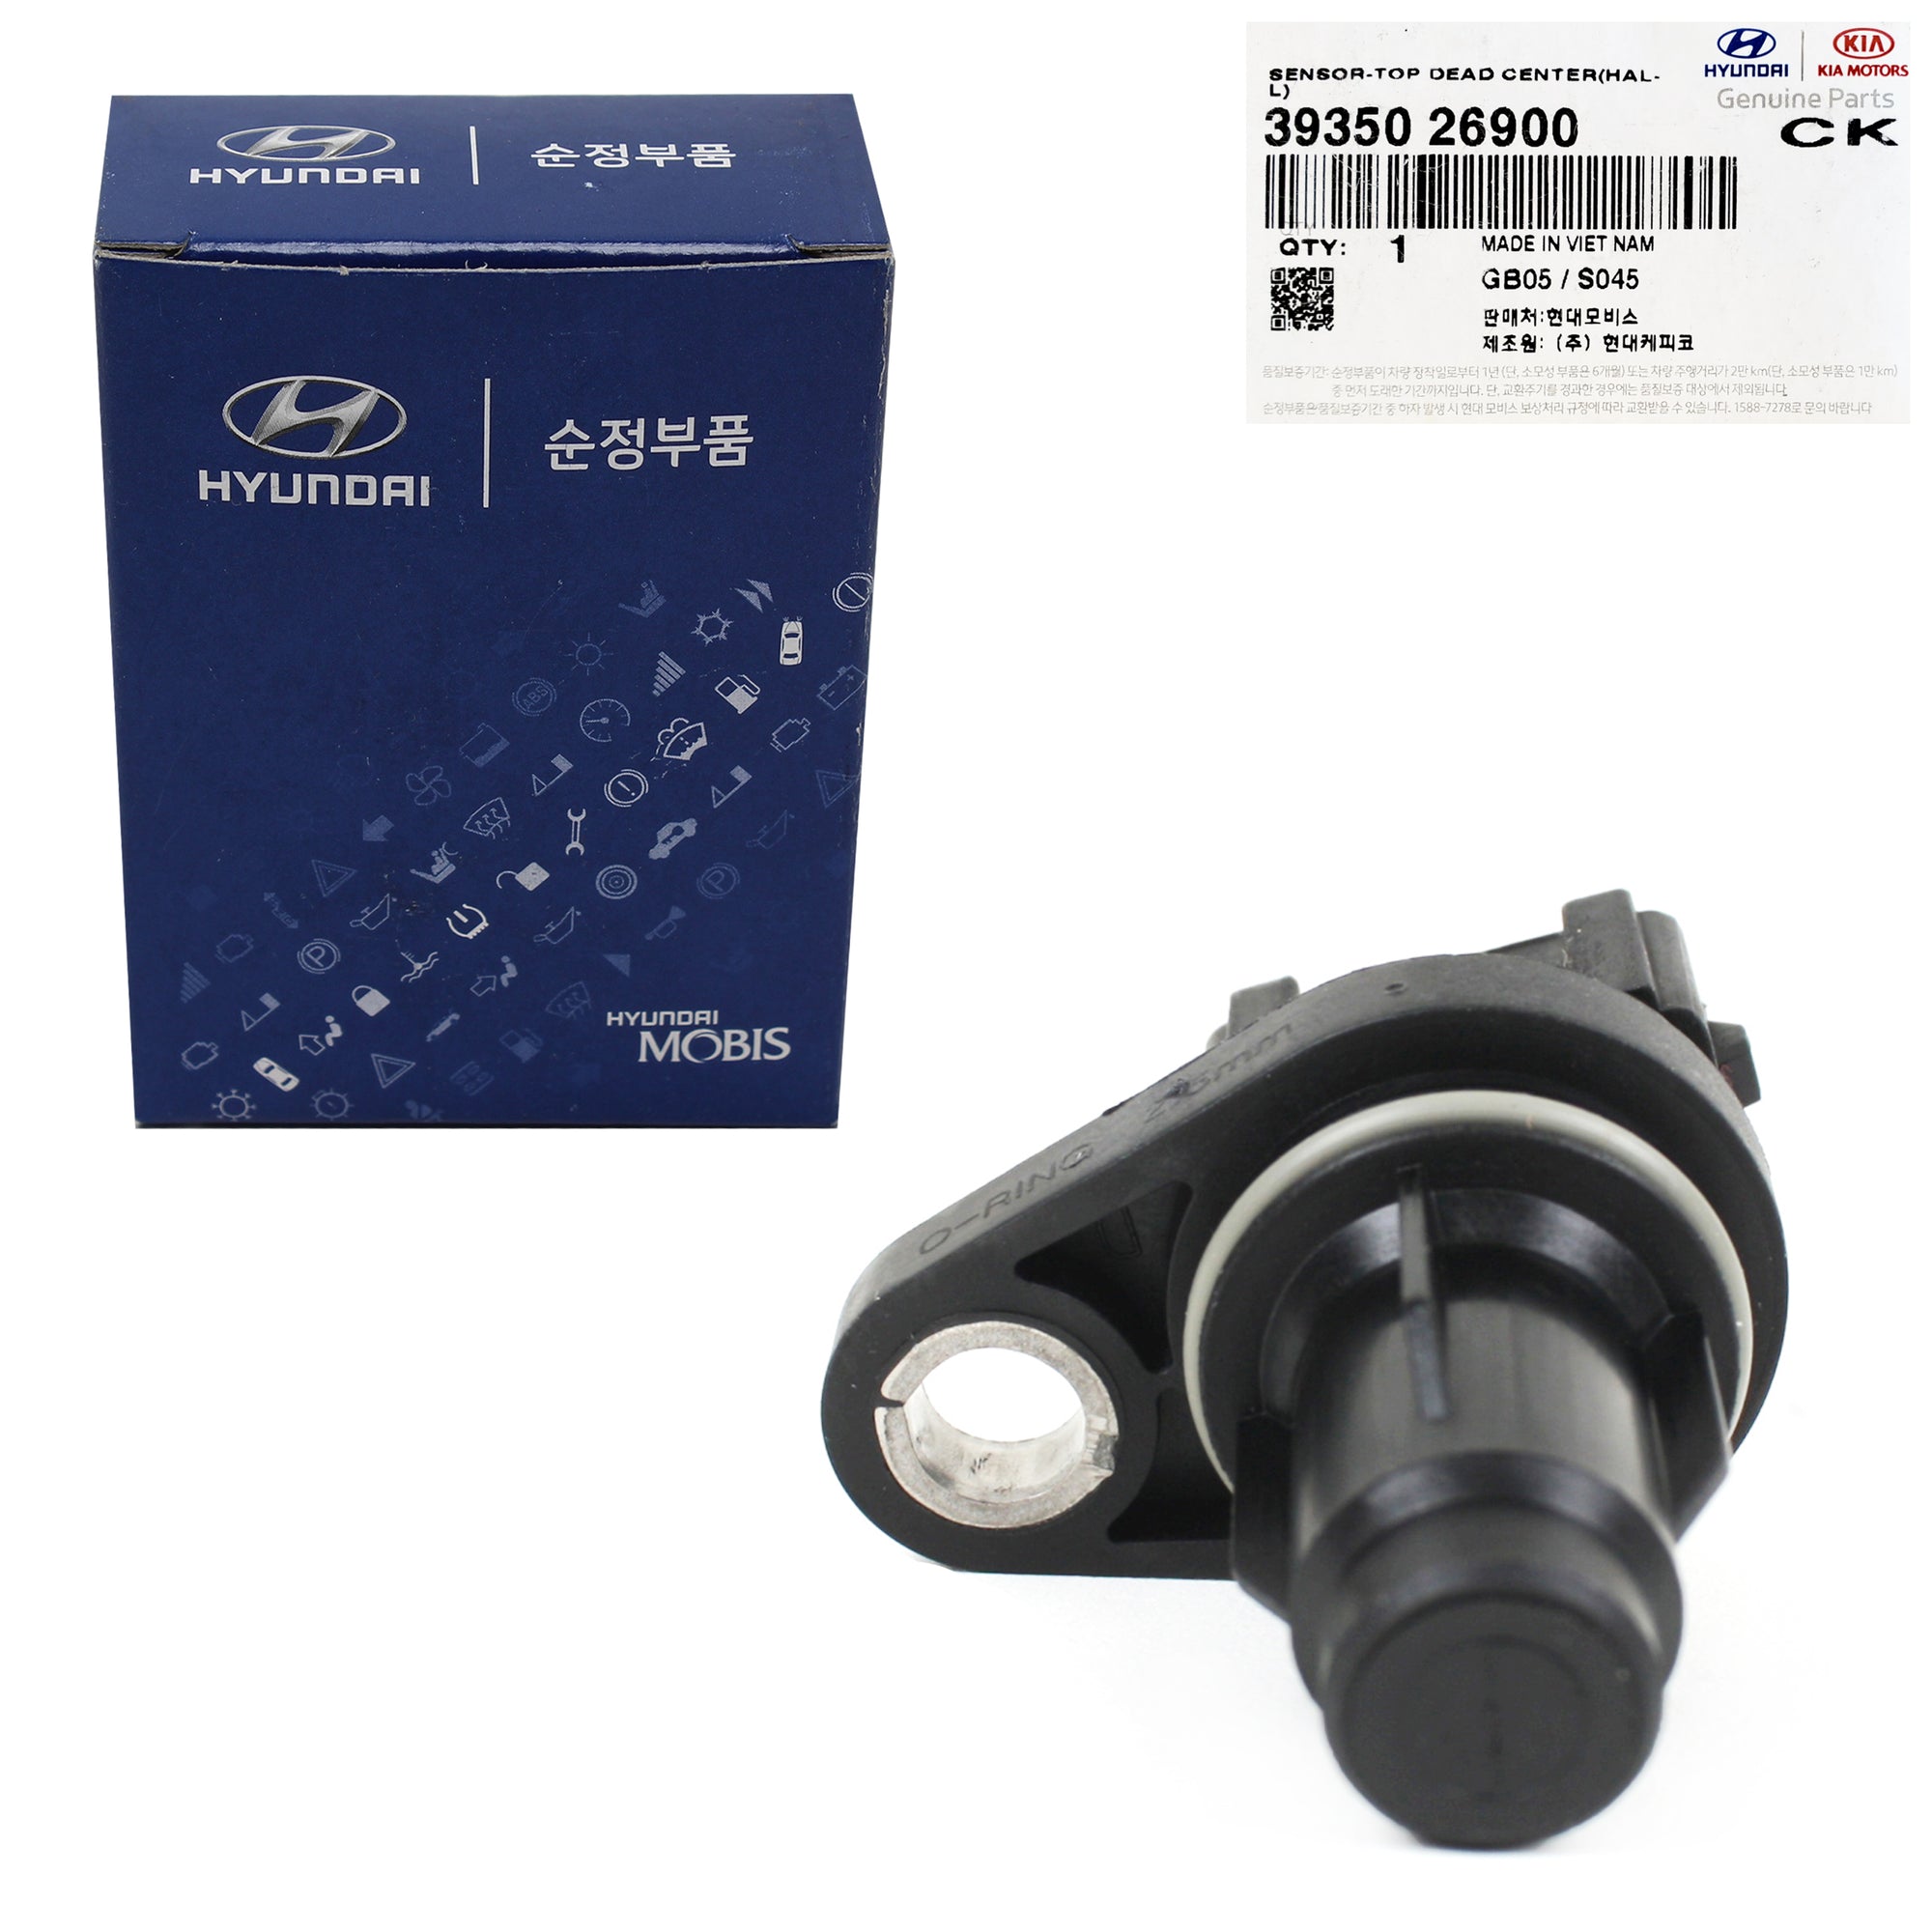 GENUINE Camshaft Position Sensor for 06-11 Hyundai Accent Rio OEM 3935026900